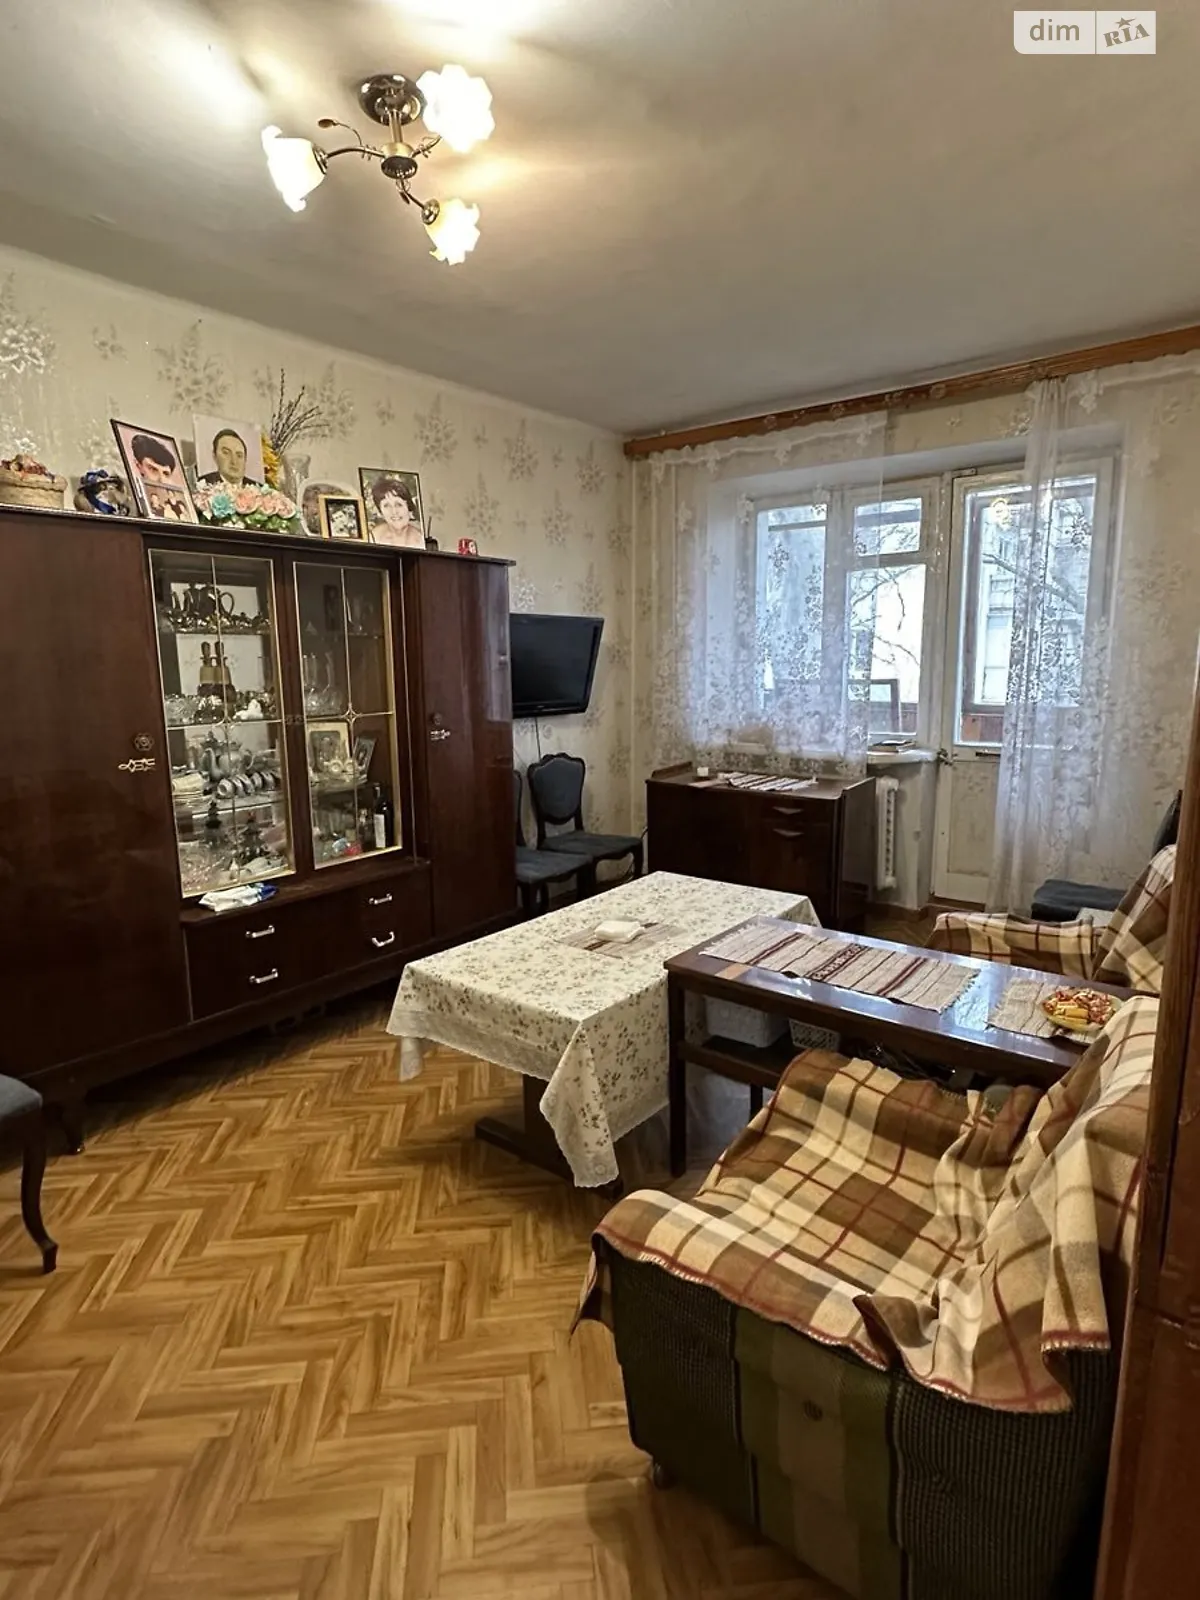 Продается комната 45 кв. м в Одессе, цена: 26500 $ - фото 1